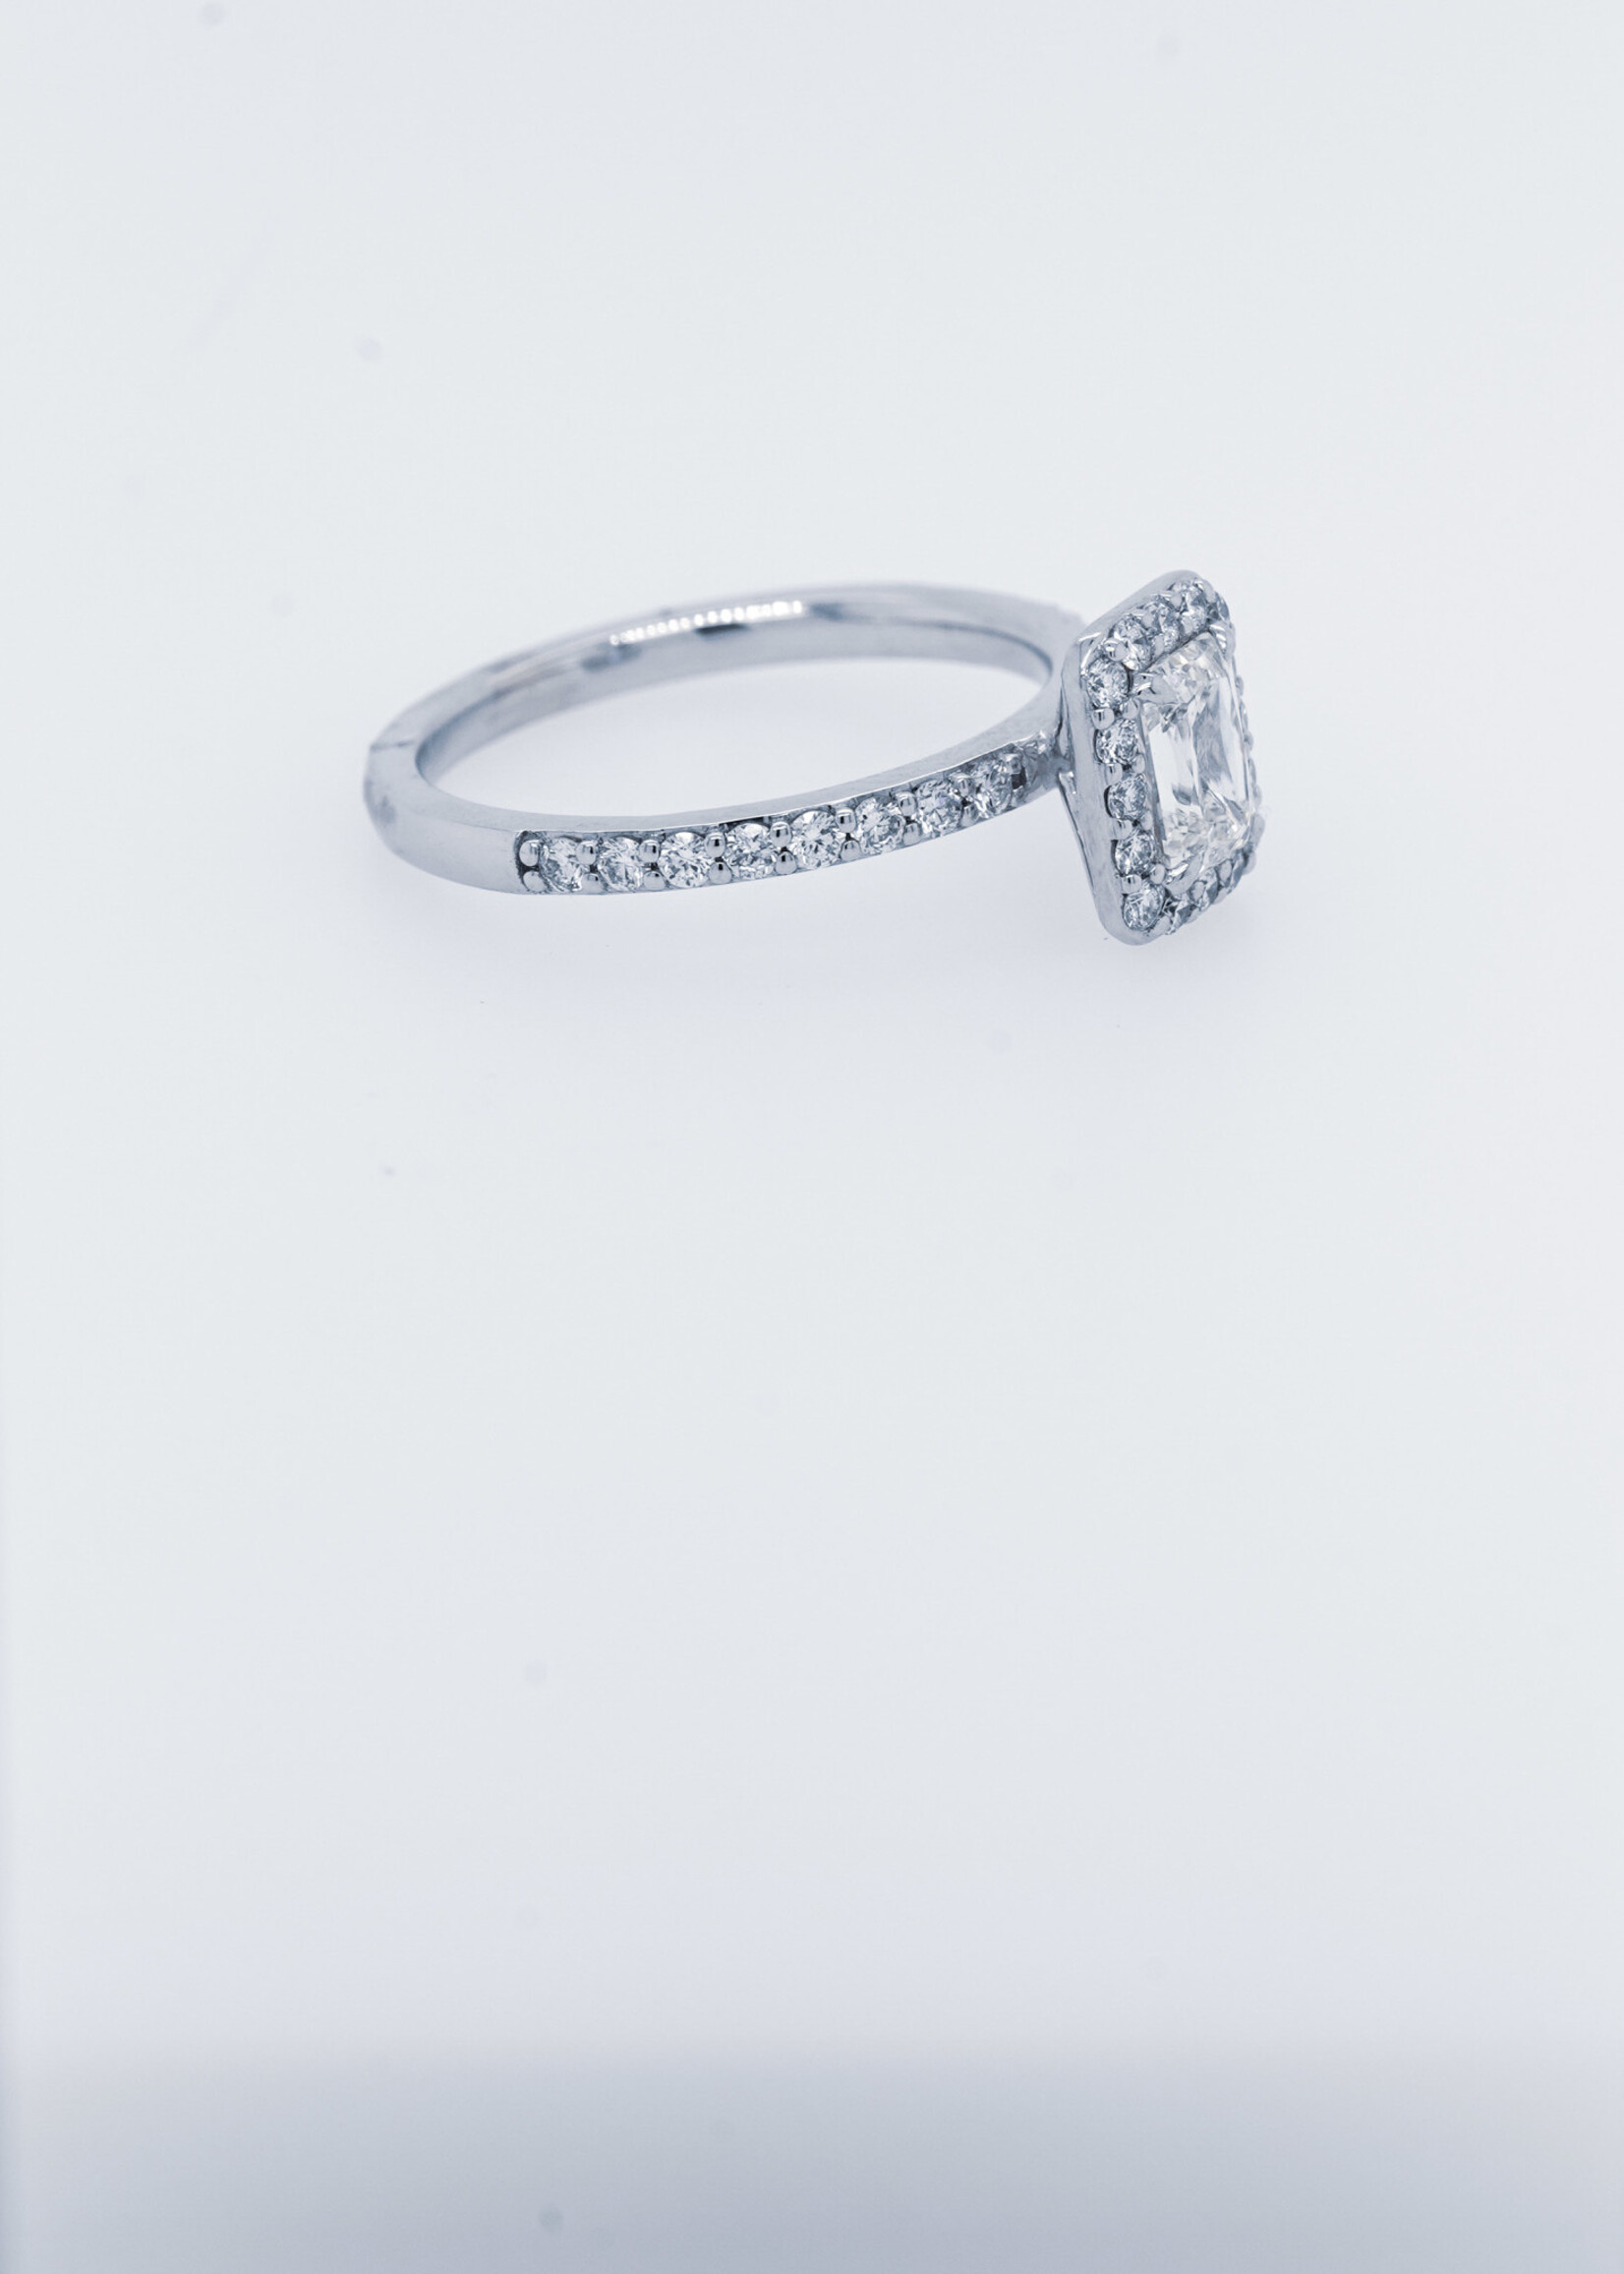 VLTT-14KW 3.0g 1.16ctw (0.75ctr) J/VS1 Criss-Cut Diamond Halo Engagement Ring (size 6.5)